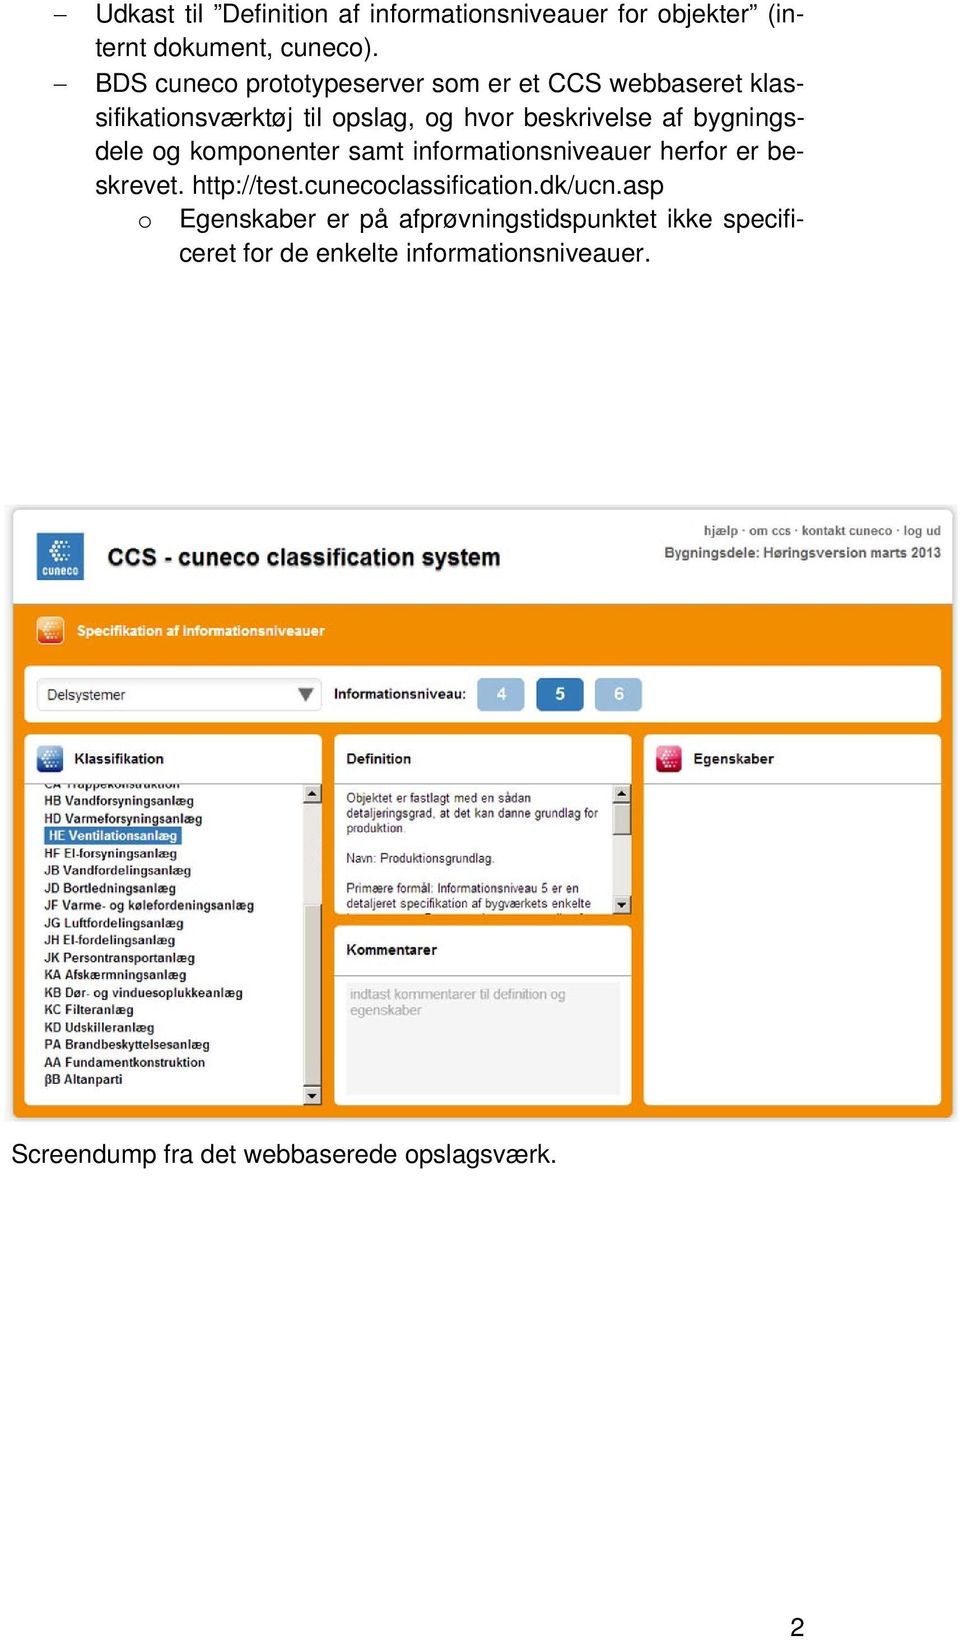 bygningsdele og komponenter samt informationsniveauer herfor er beskrevet. http://test.cunecoclassification.dk/ucn.